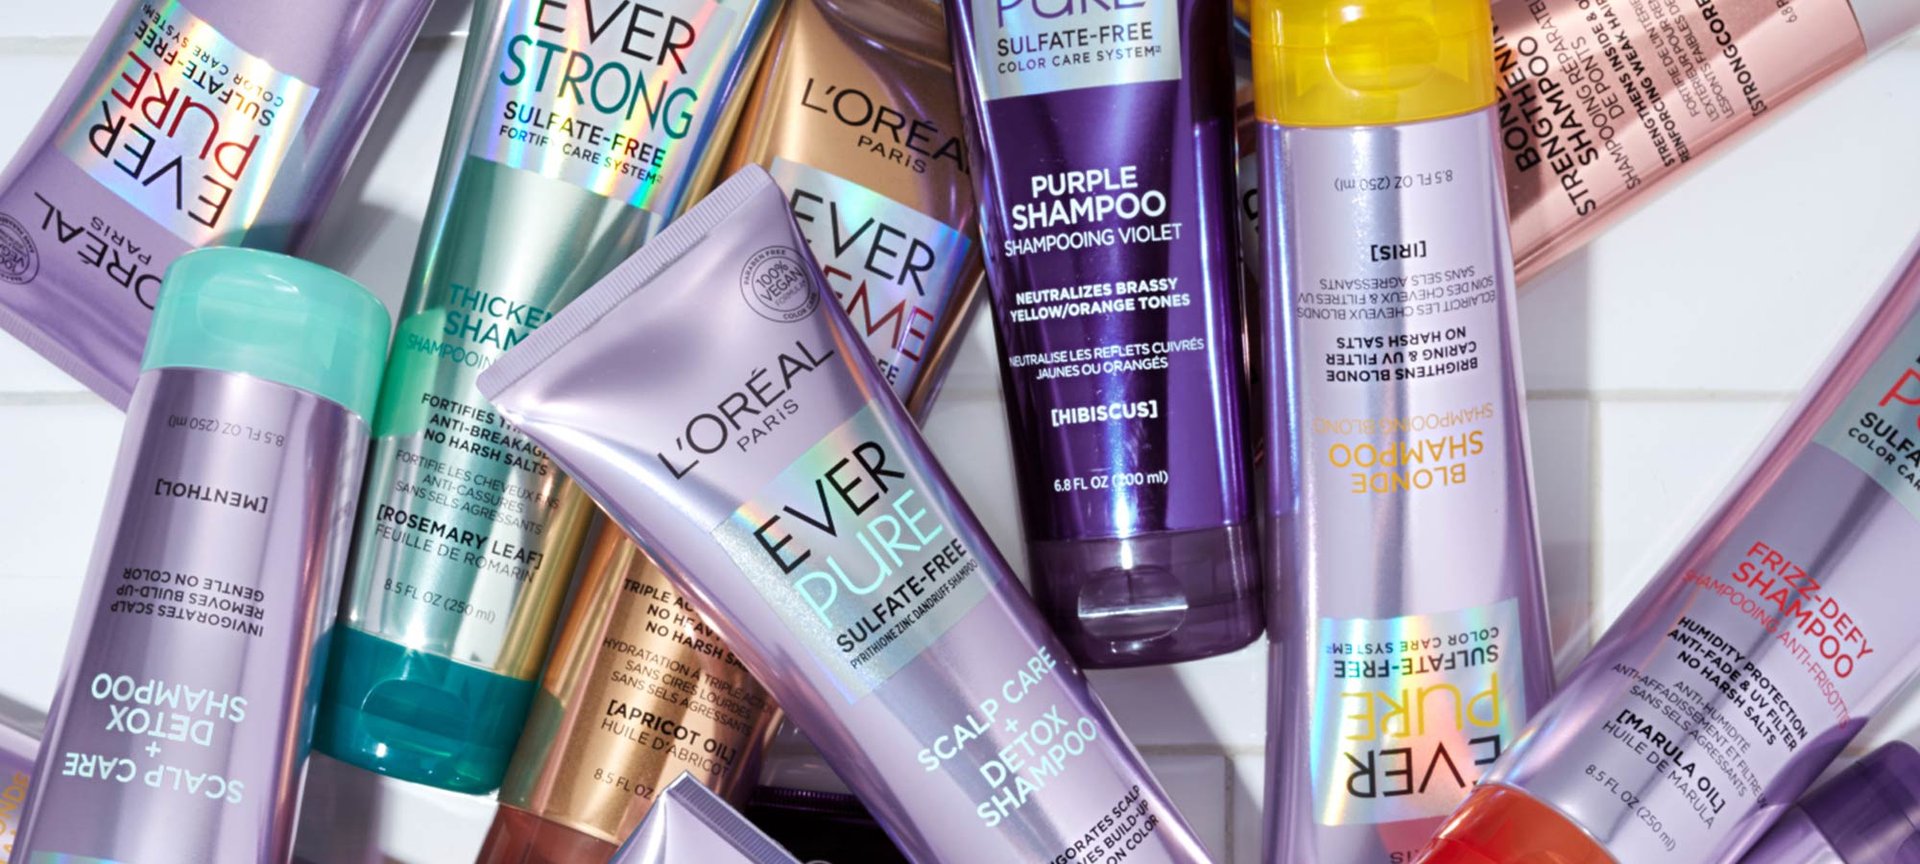 Why You Should Use a Sulfate-Free Shampoo - L'Oréal Paris